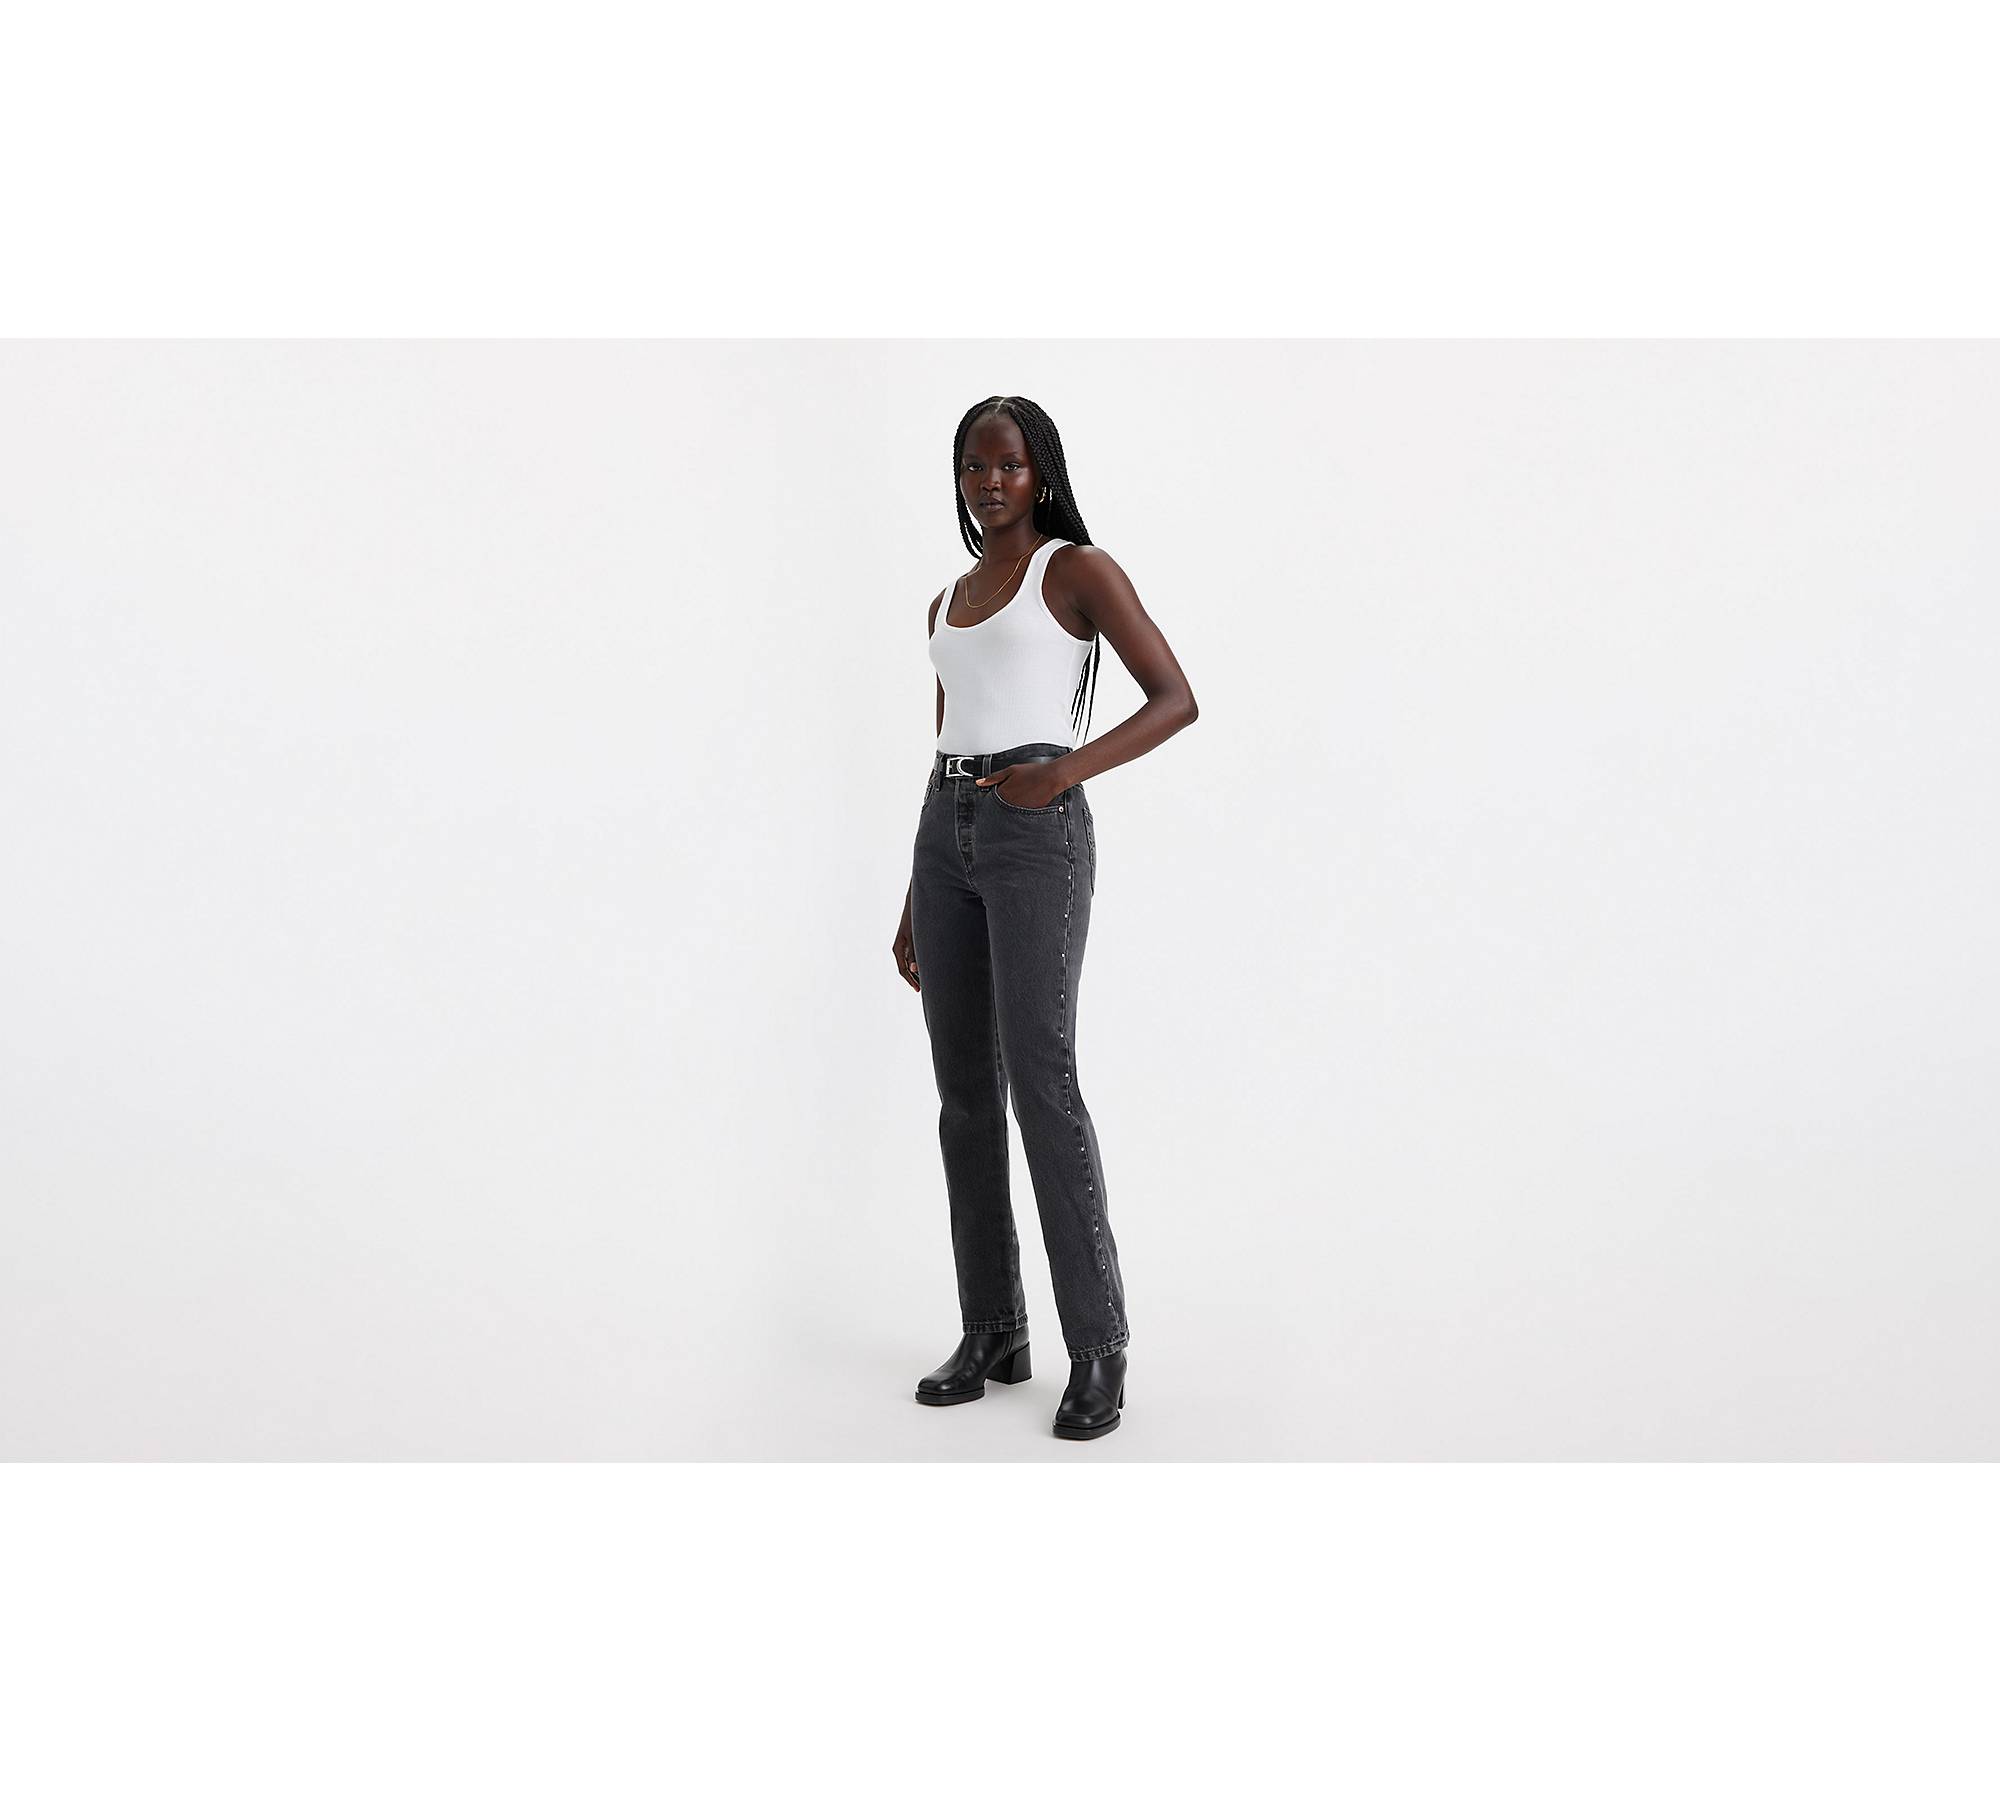 Design Collective Womens Black Dress Pants Size 12 - beyond exchange